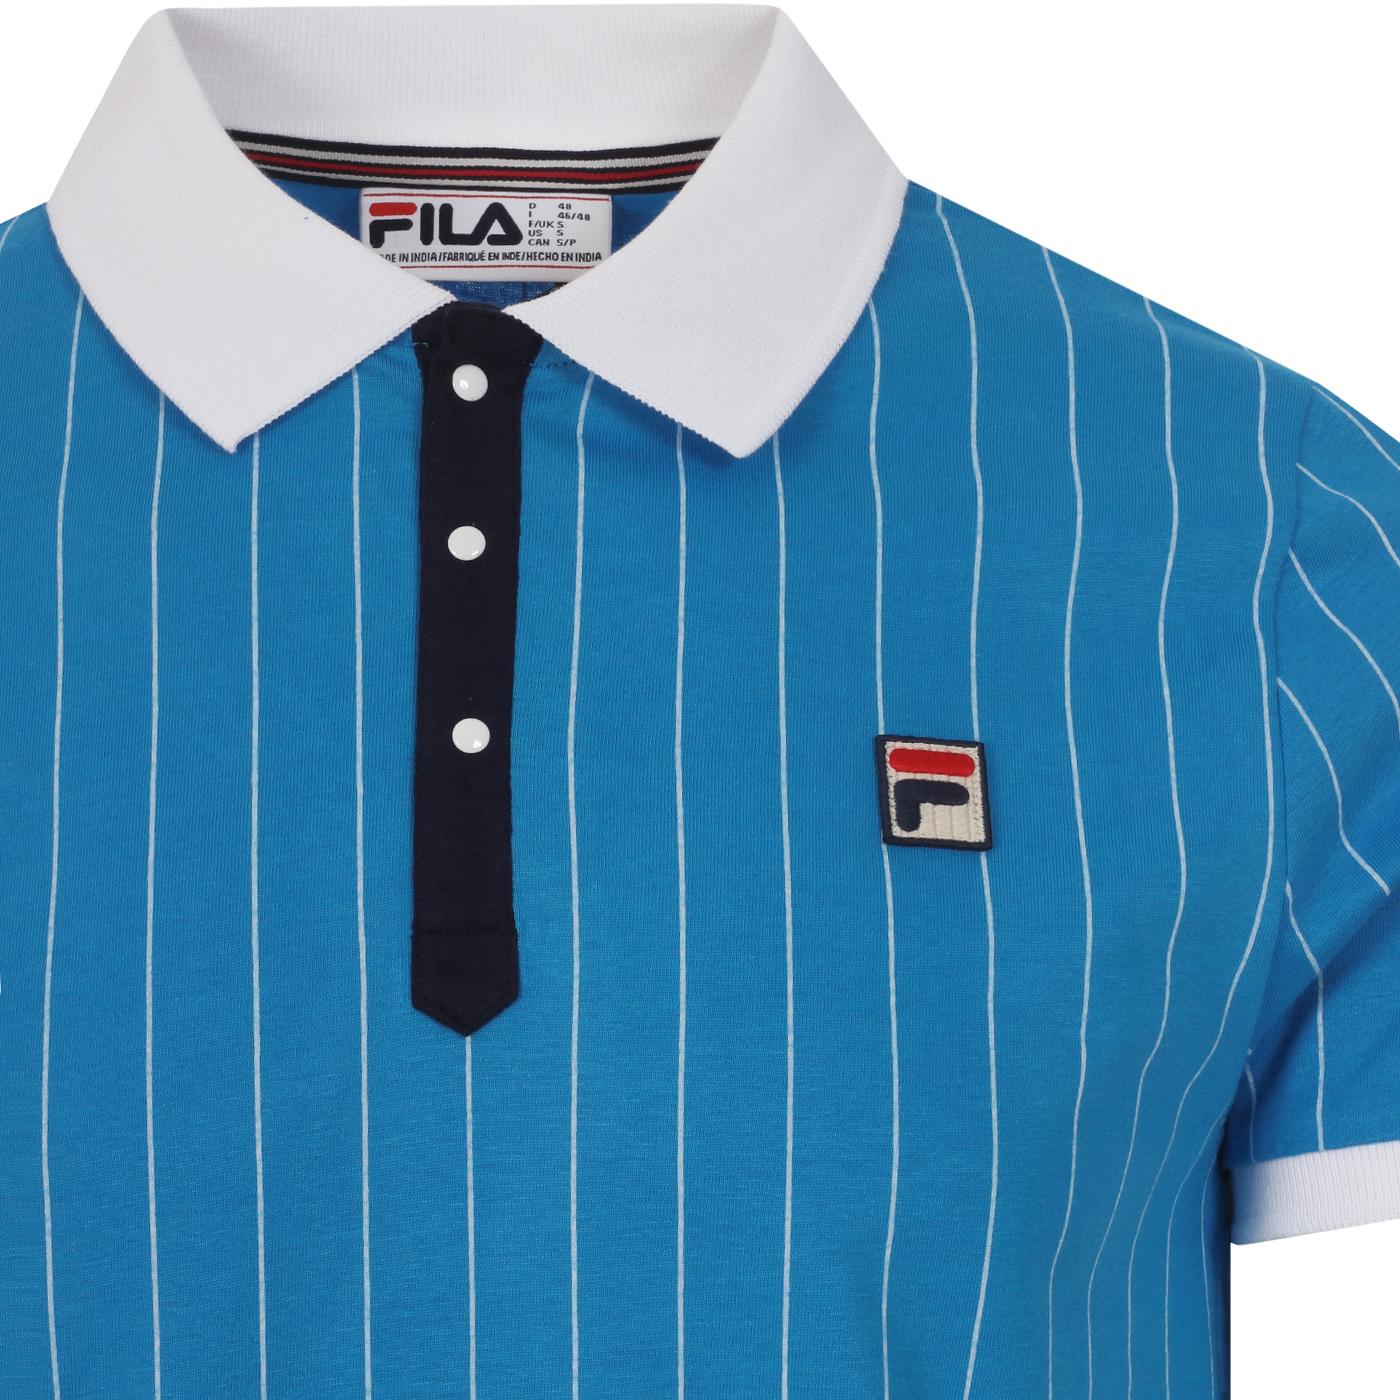 FILA VINTAGE BB1 Retro 70s Borg Tennis Polo Shirt Blue Aster